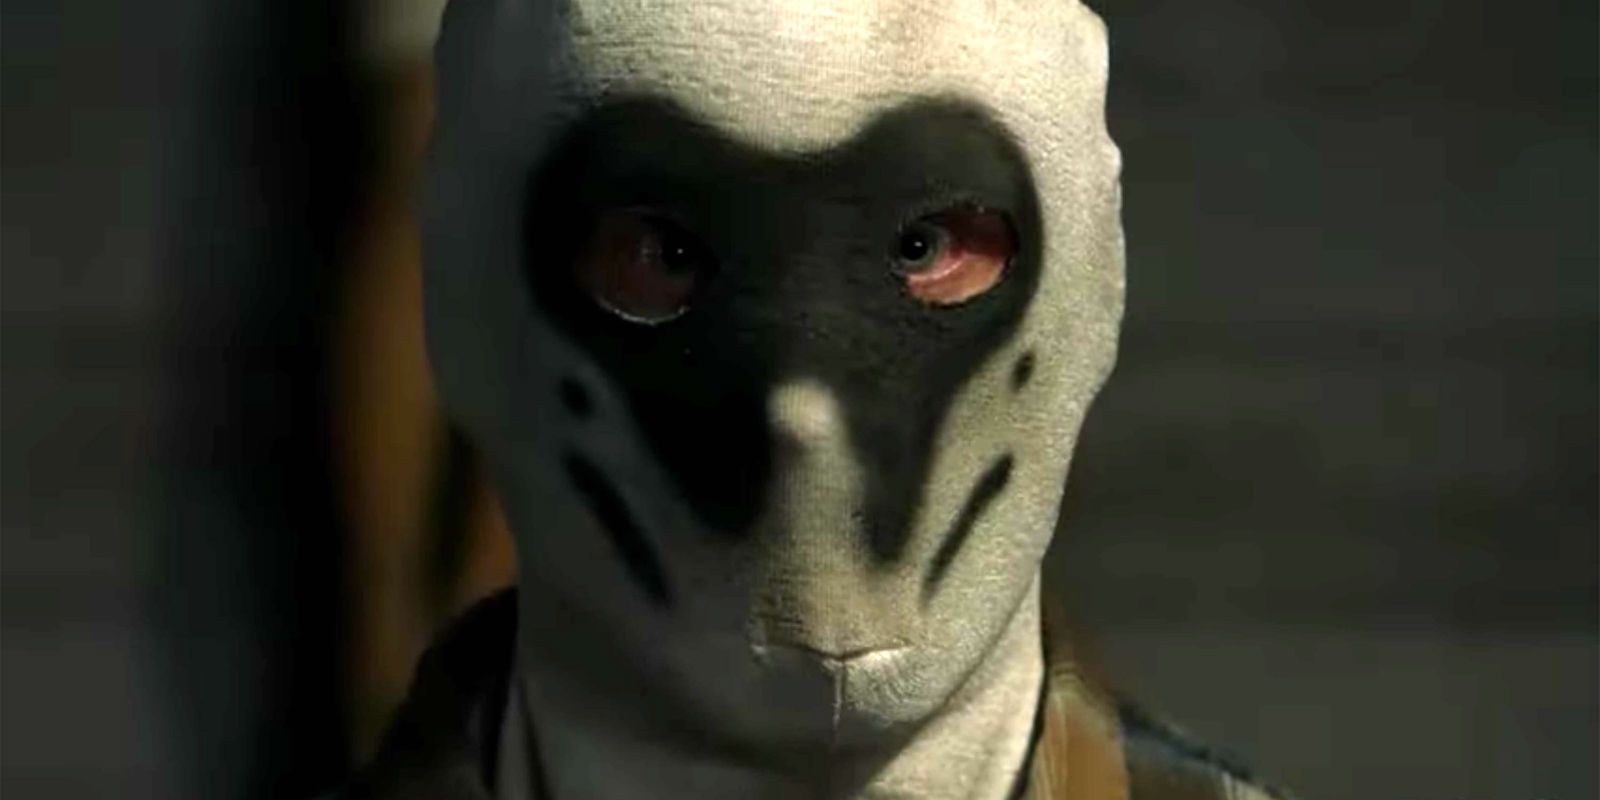 HBO Watchmen Rorschach Mask